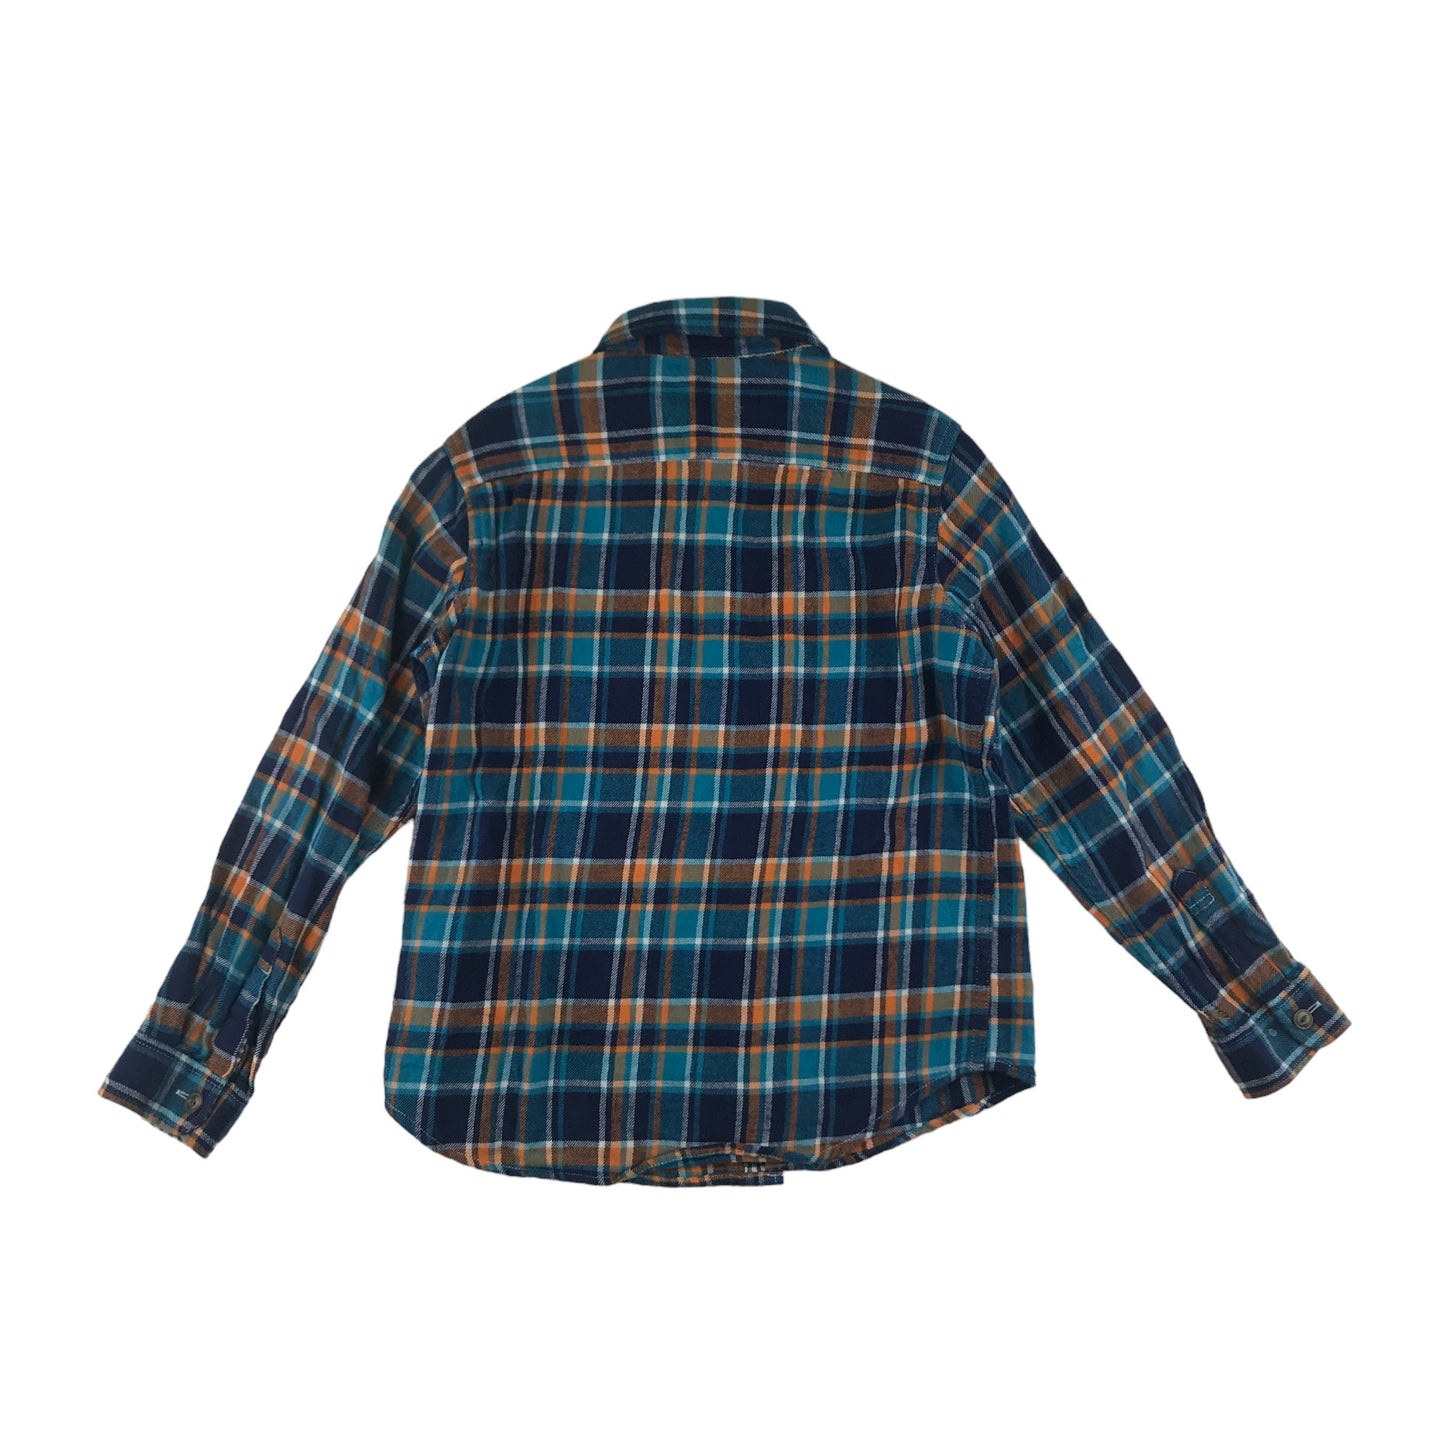 Uniqlo Shirt Age 7 Blue and Orange Checked Flannel Button Up Cotton